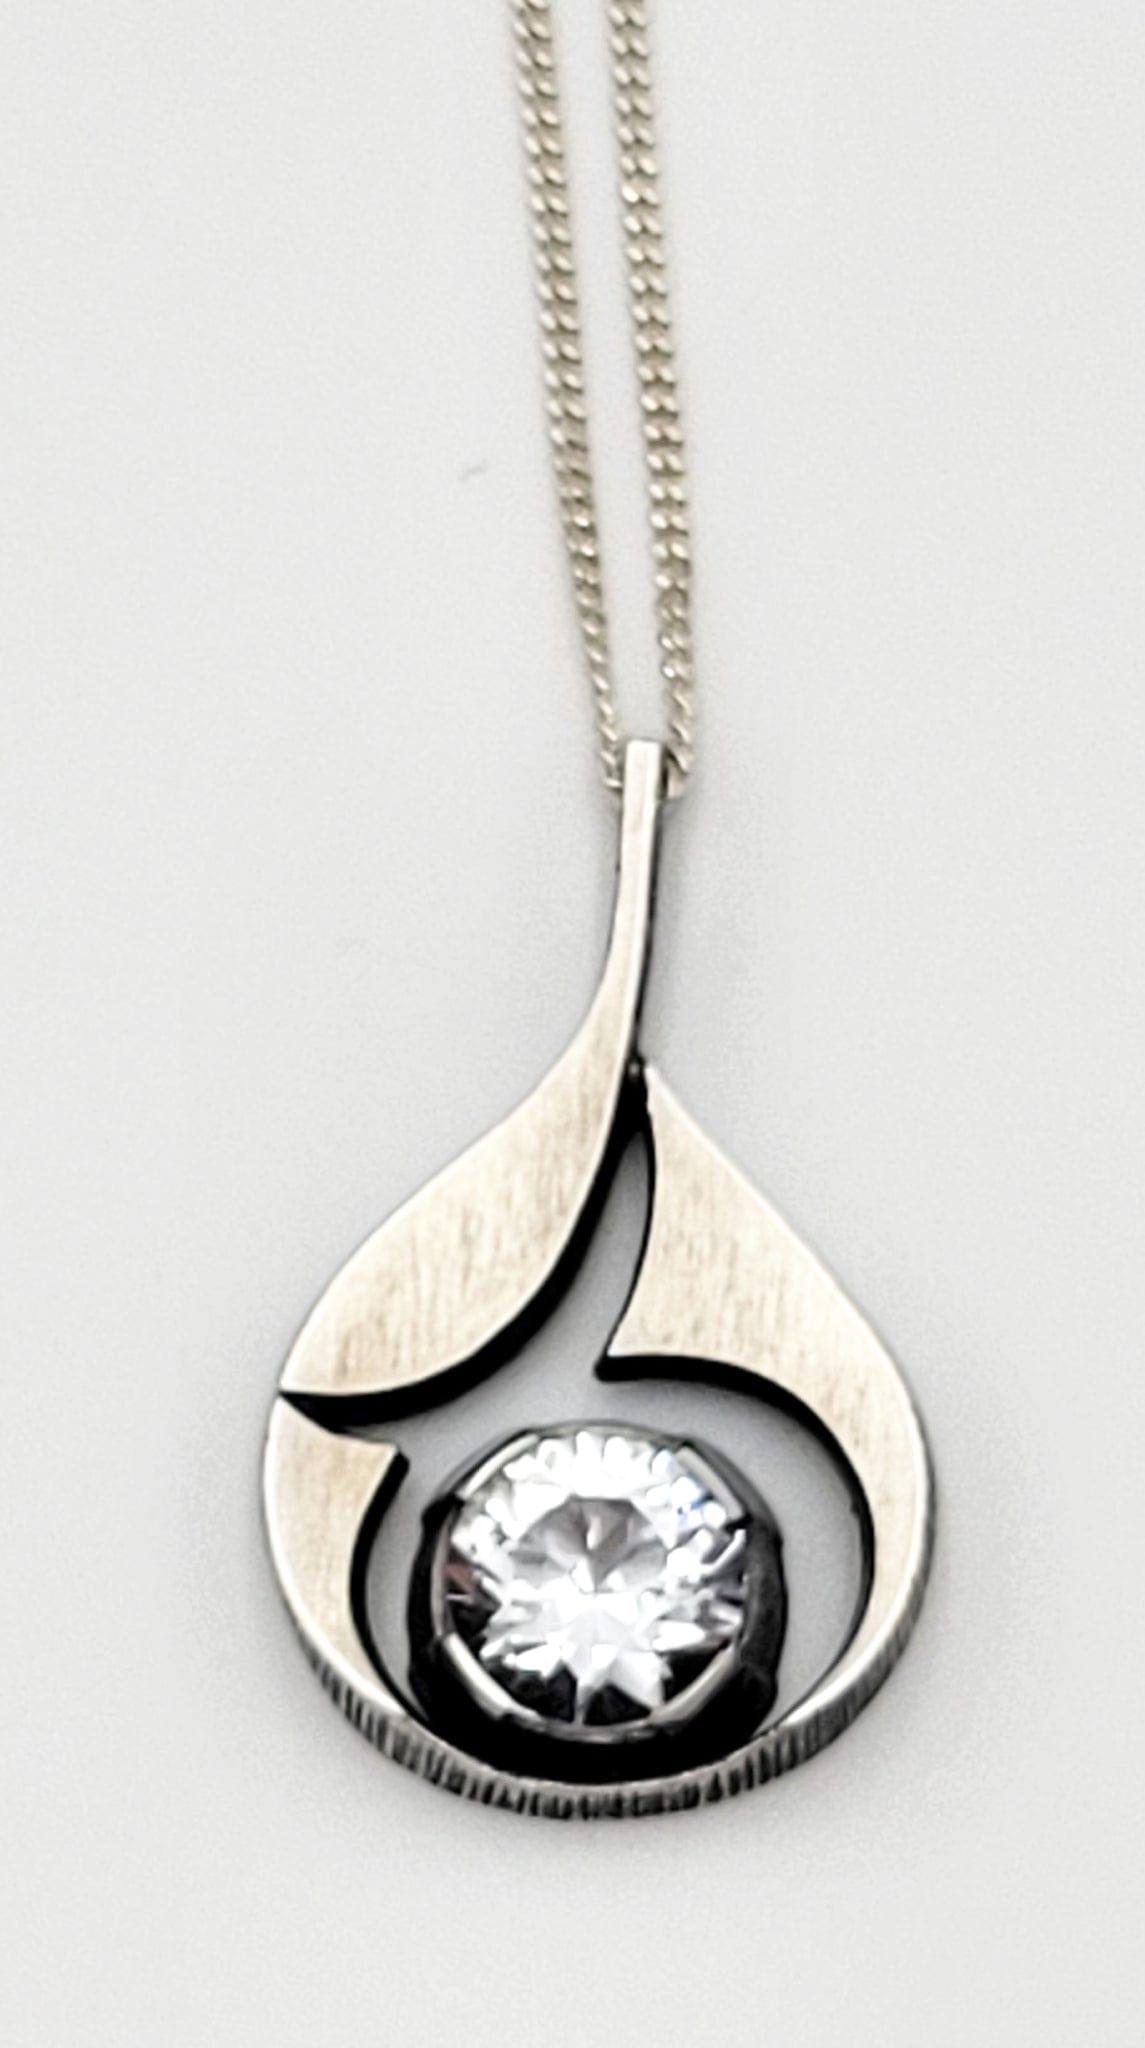 Karl Laine Jewelry Finnish Designer Karl LAINE Modernist Sterling & Quartz Crystal Pendant Necklace